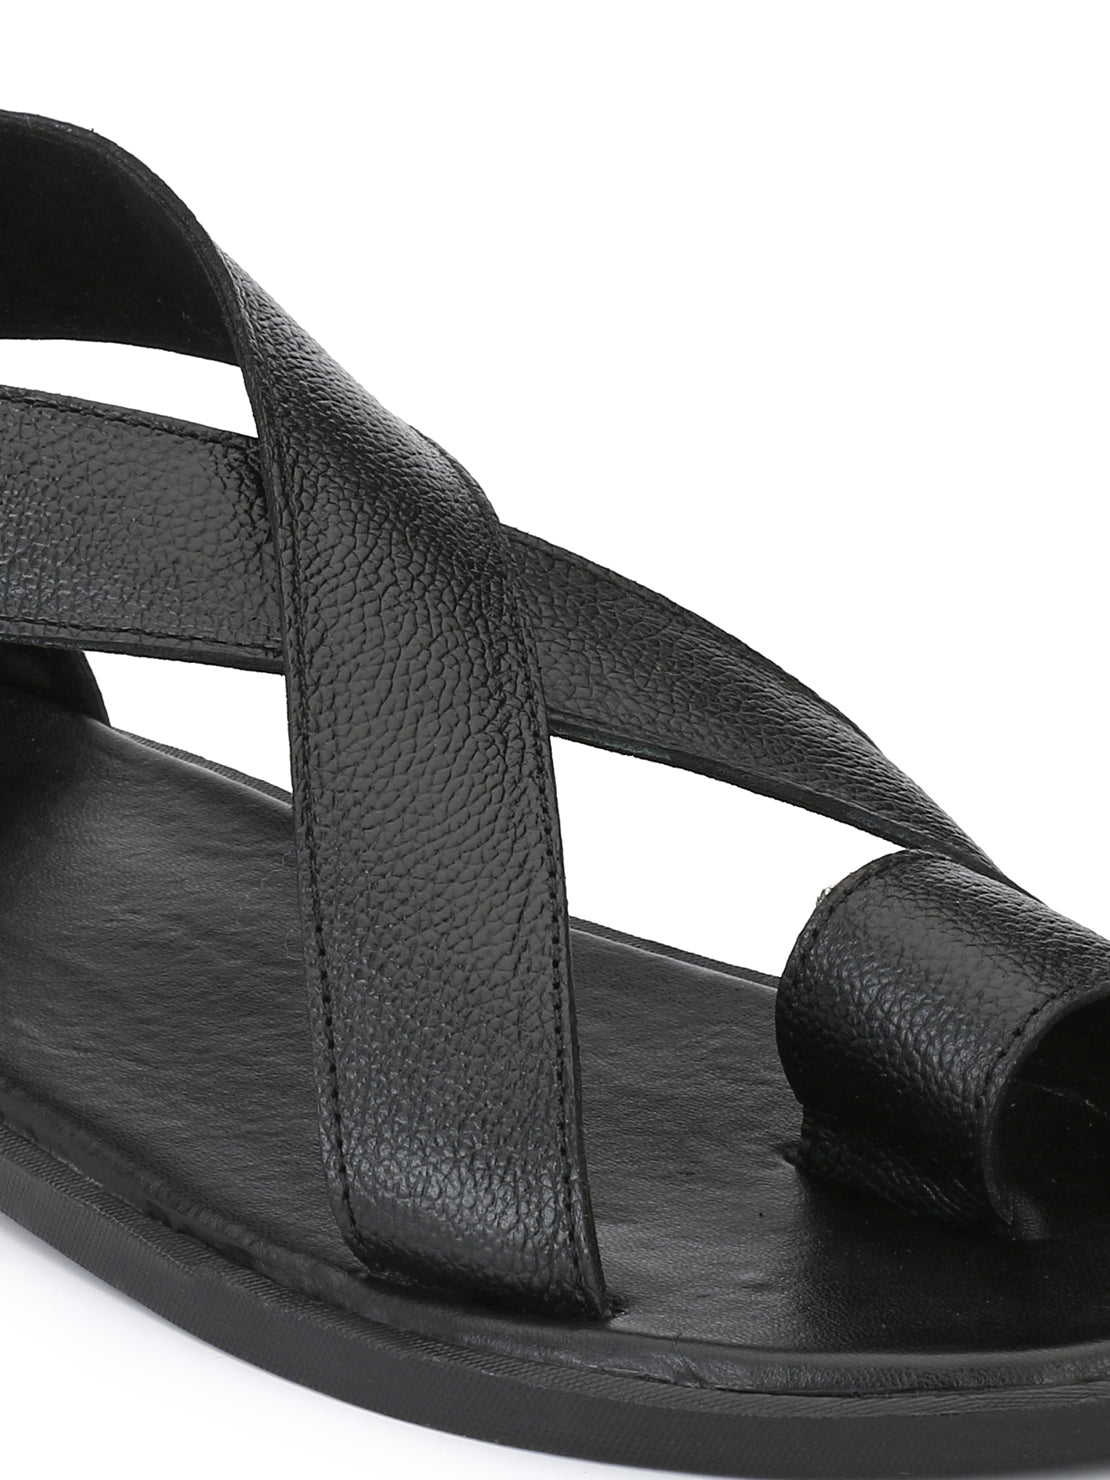 Guava Men Anti-Sweat Leather Black Sandals (GV15JA555)